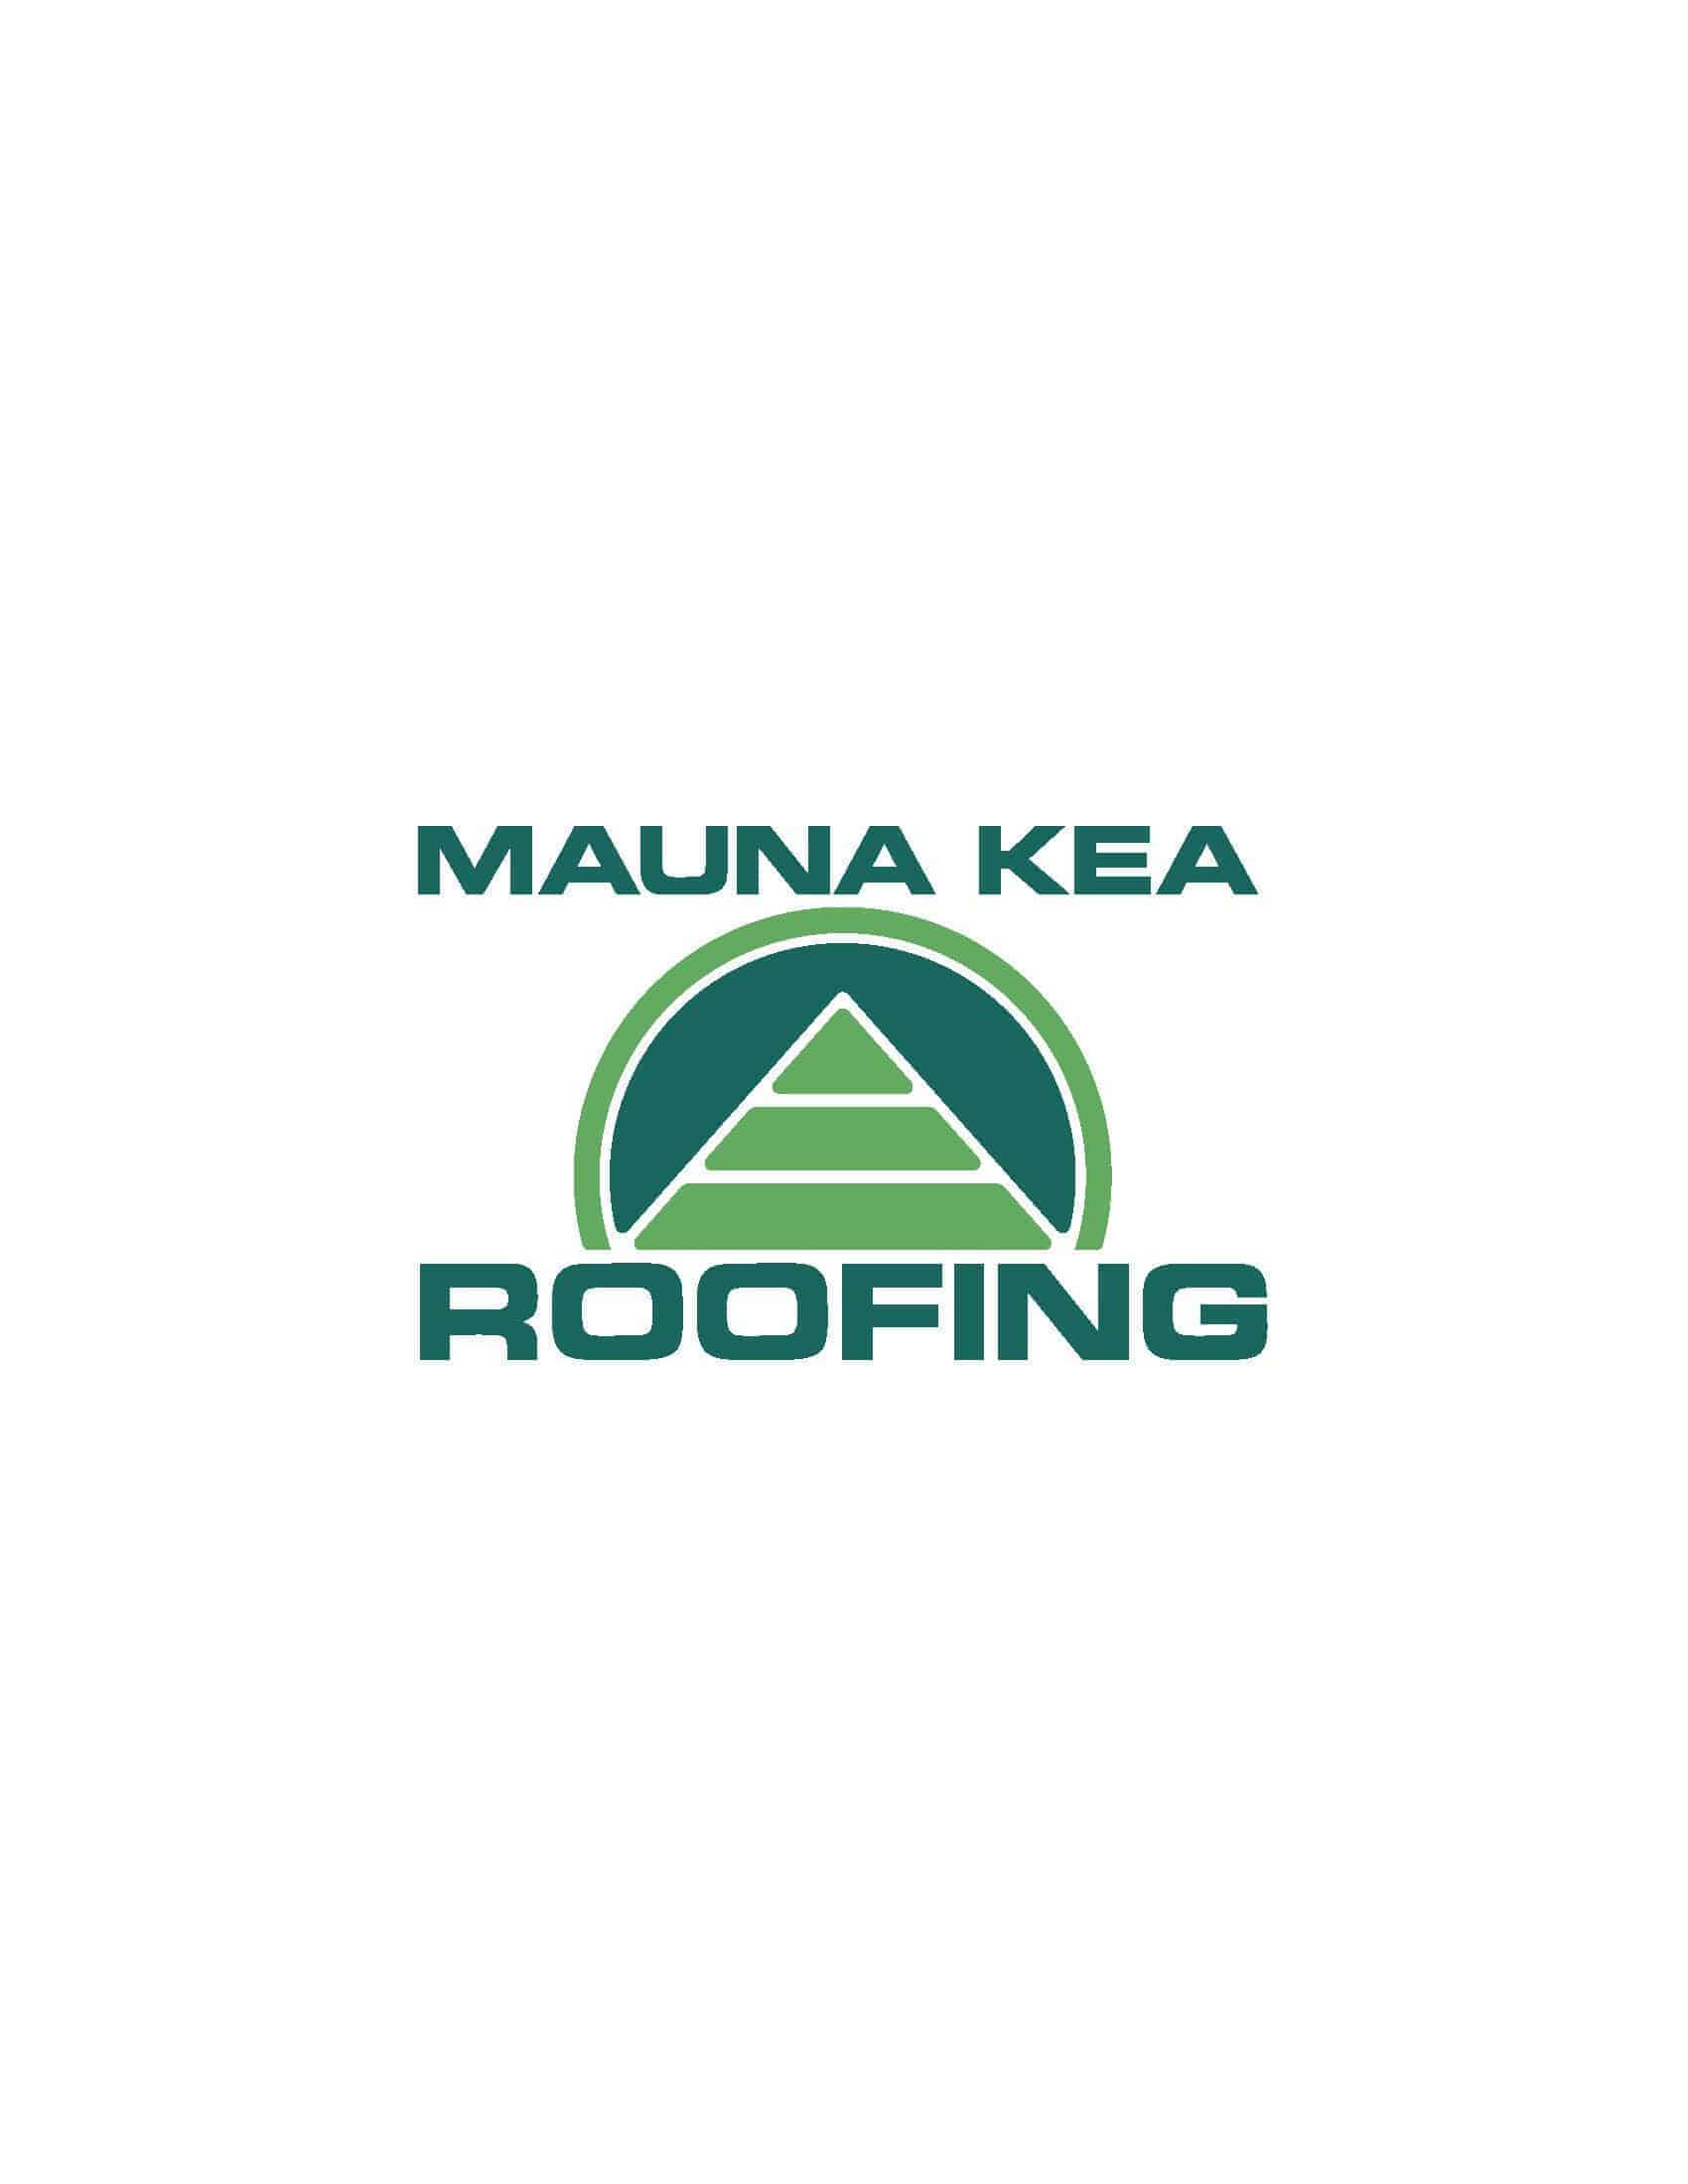 Mauna Kea Roofing Logo